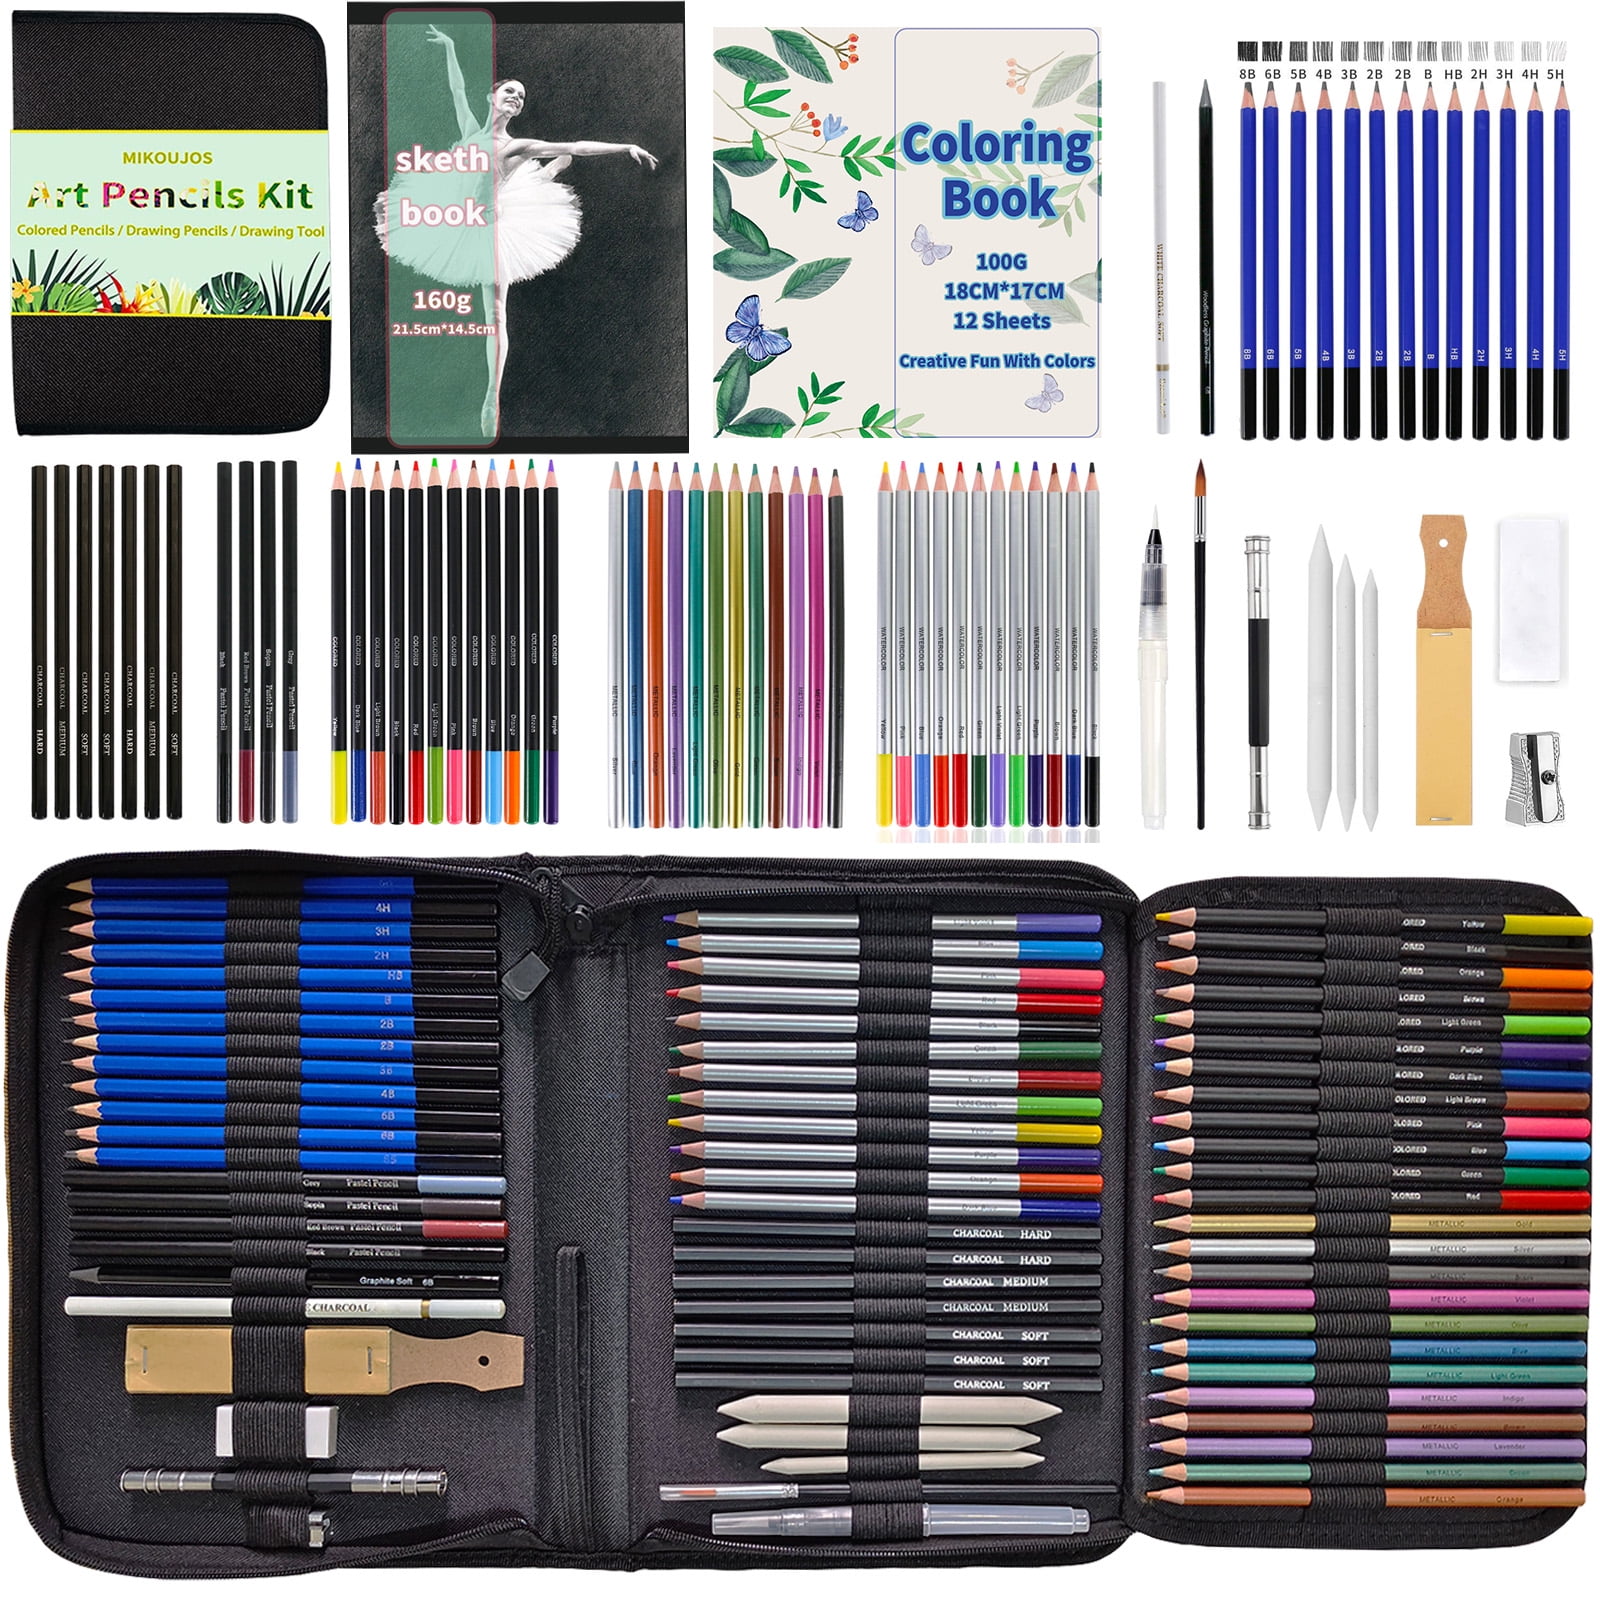 Art Supplies for Adults Kids, 81-Pack Pro Art Kit School Drawing Supplies  Pencil Set, Sketch Book, Sketching Pencils Kits, Graphite Pencils, Charcoal  Pencils, Watercolor Metallic Sketch Art Pencils - Yahoo Shopping